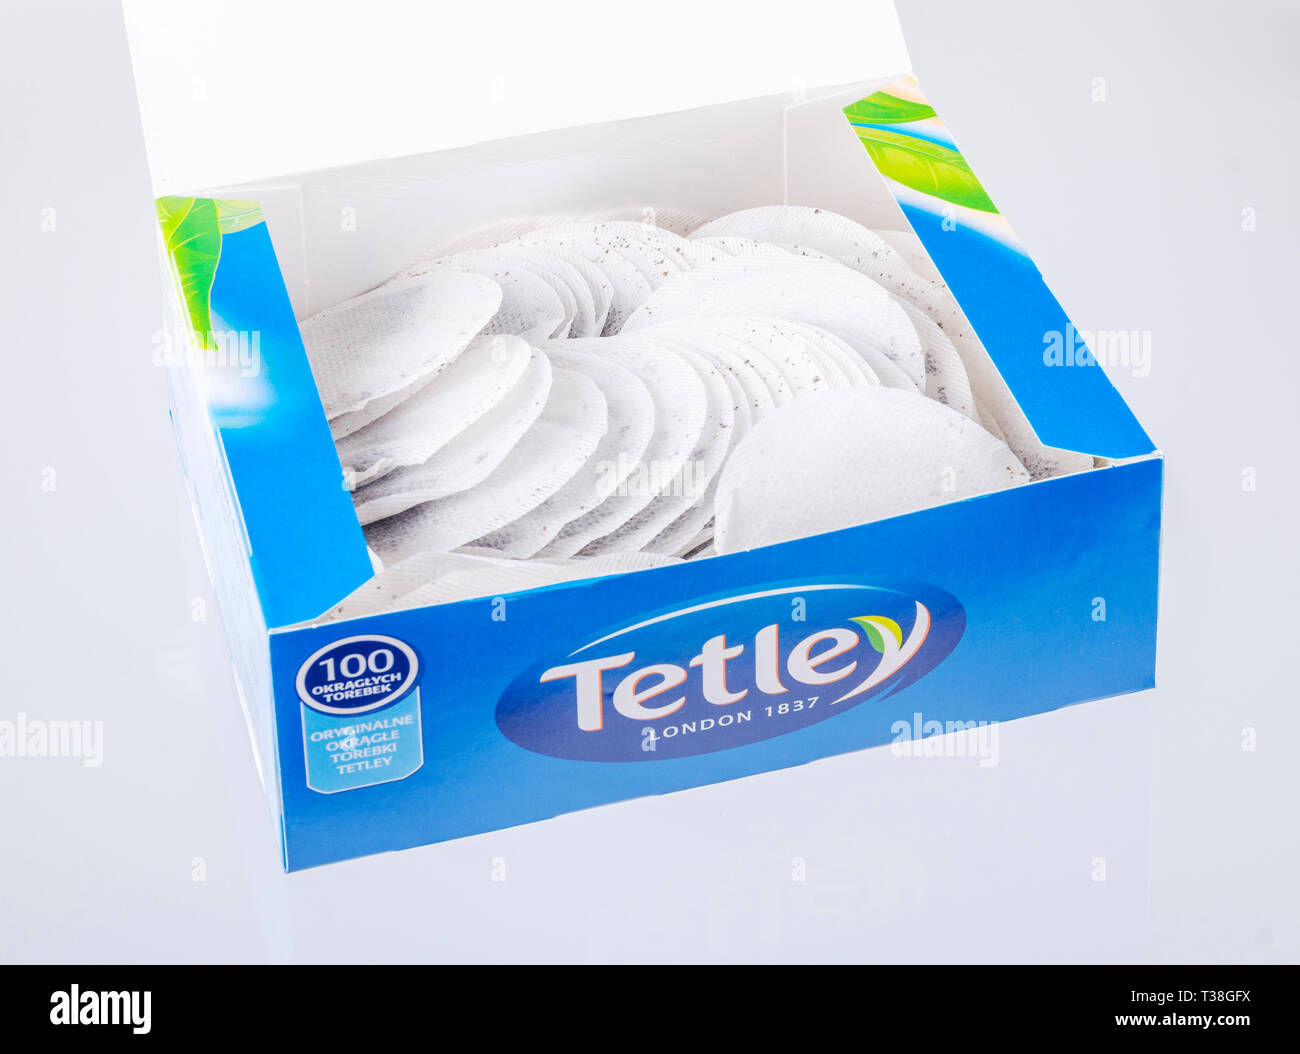 Tetley tea bag hi-res stock photography and images - Alamy